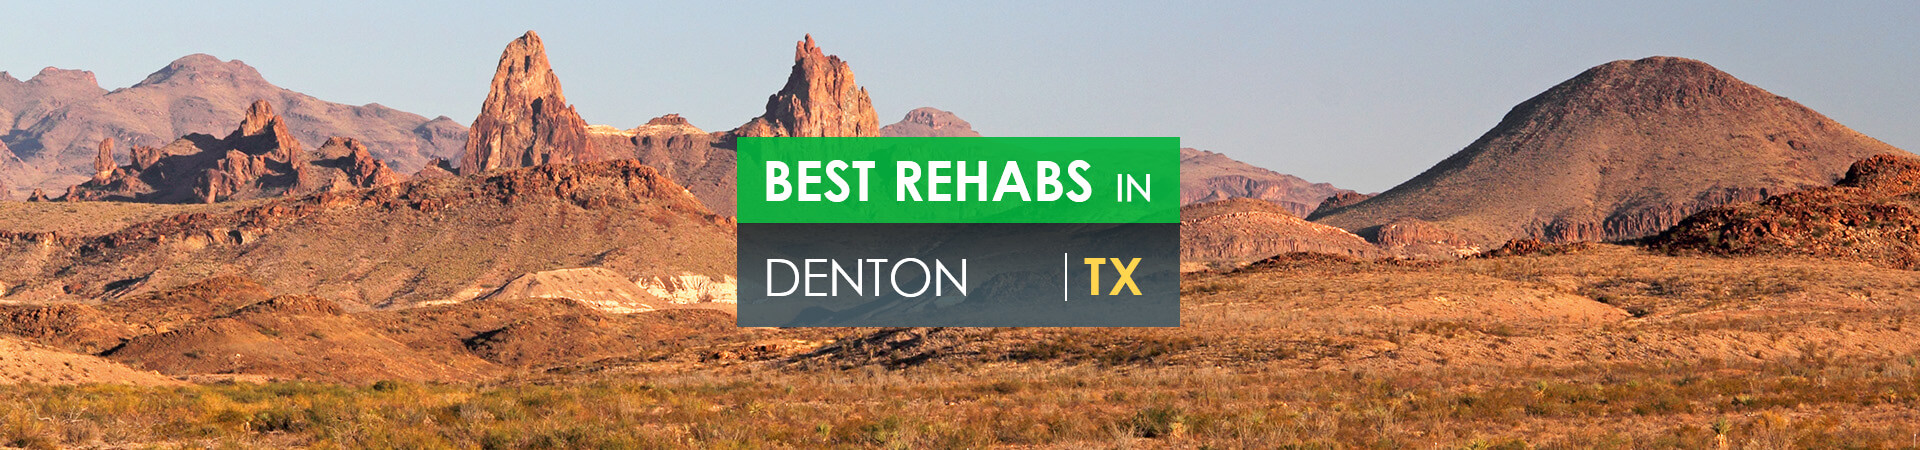 Best rehabs in Denton, TX